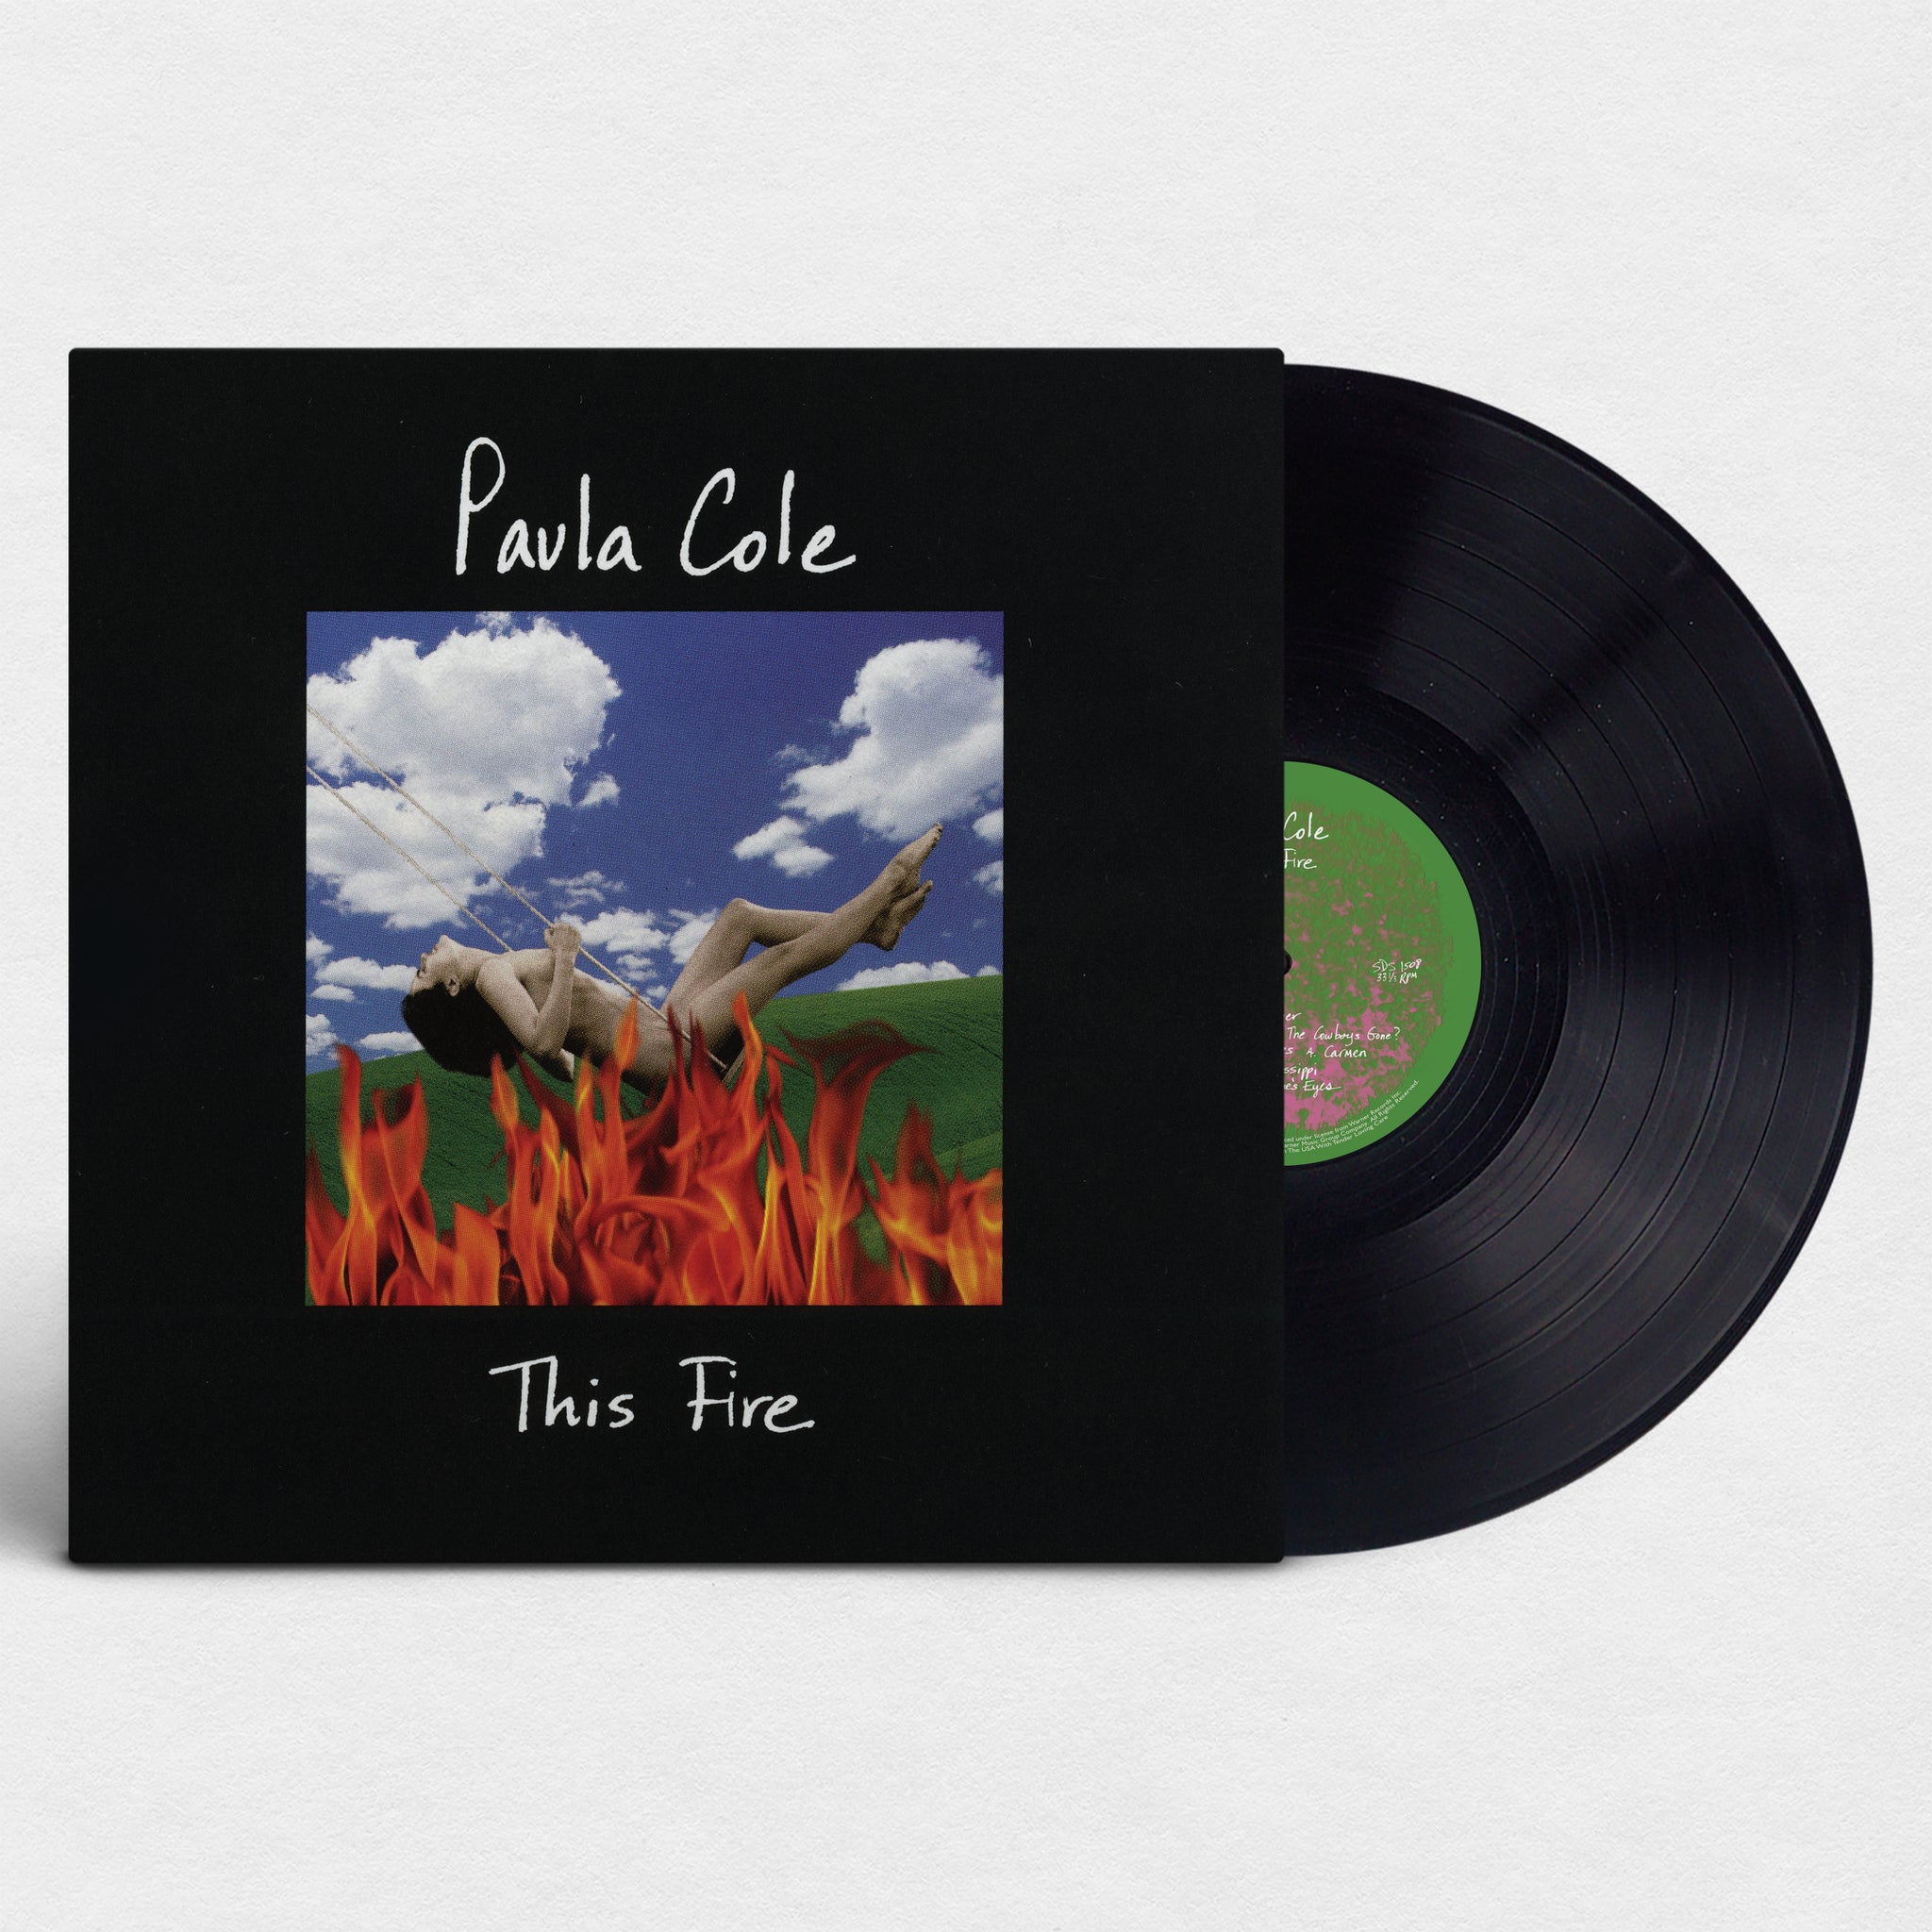 Paula Cole "This Fire" - Classic Black Vinyl [Ltd. quantities] Now Shipping